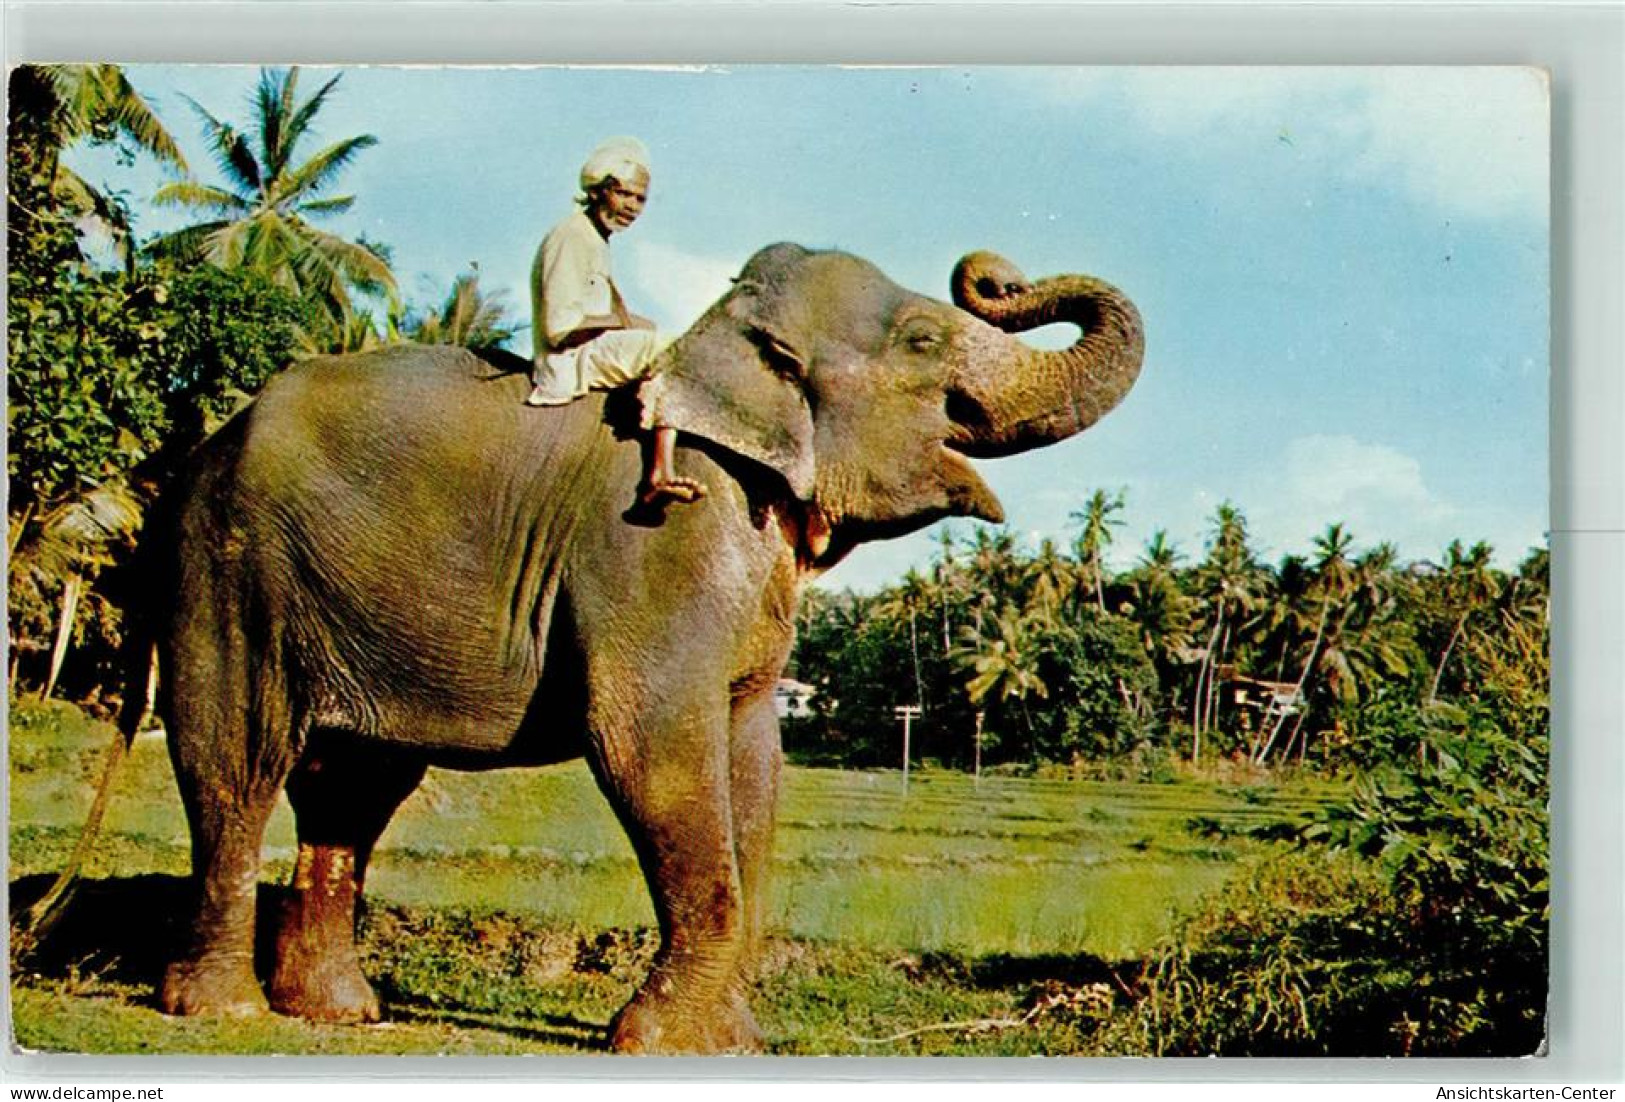 39281406 - Plantagen Ceylon CP26 - Elefantes